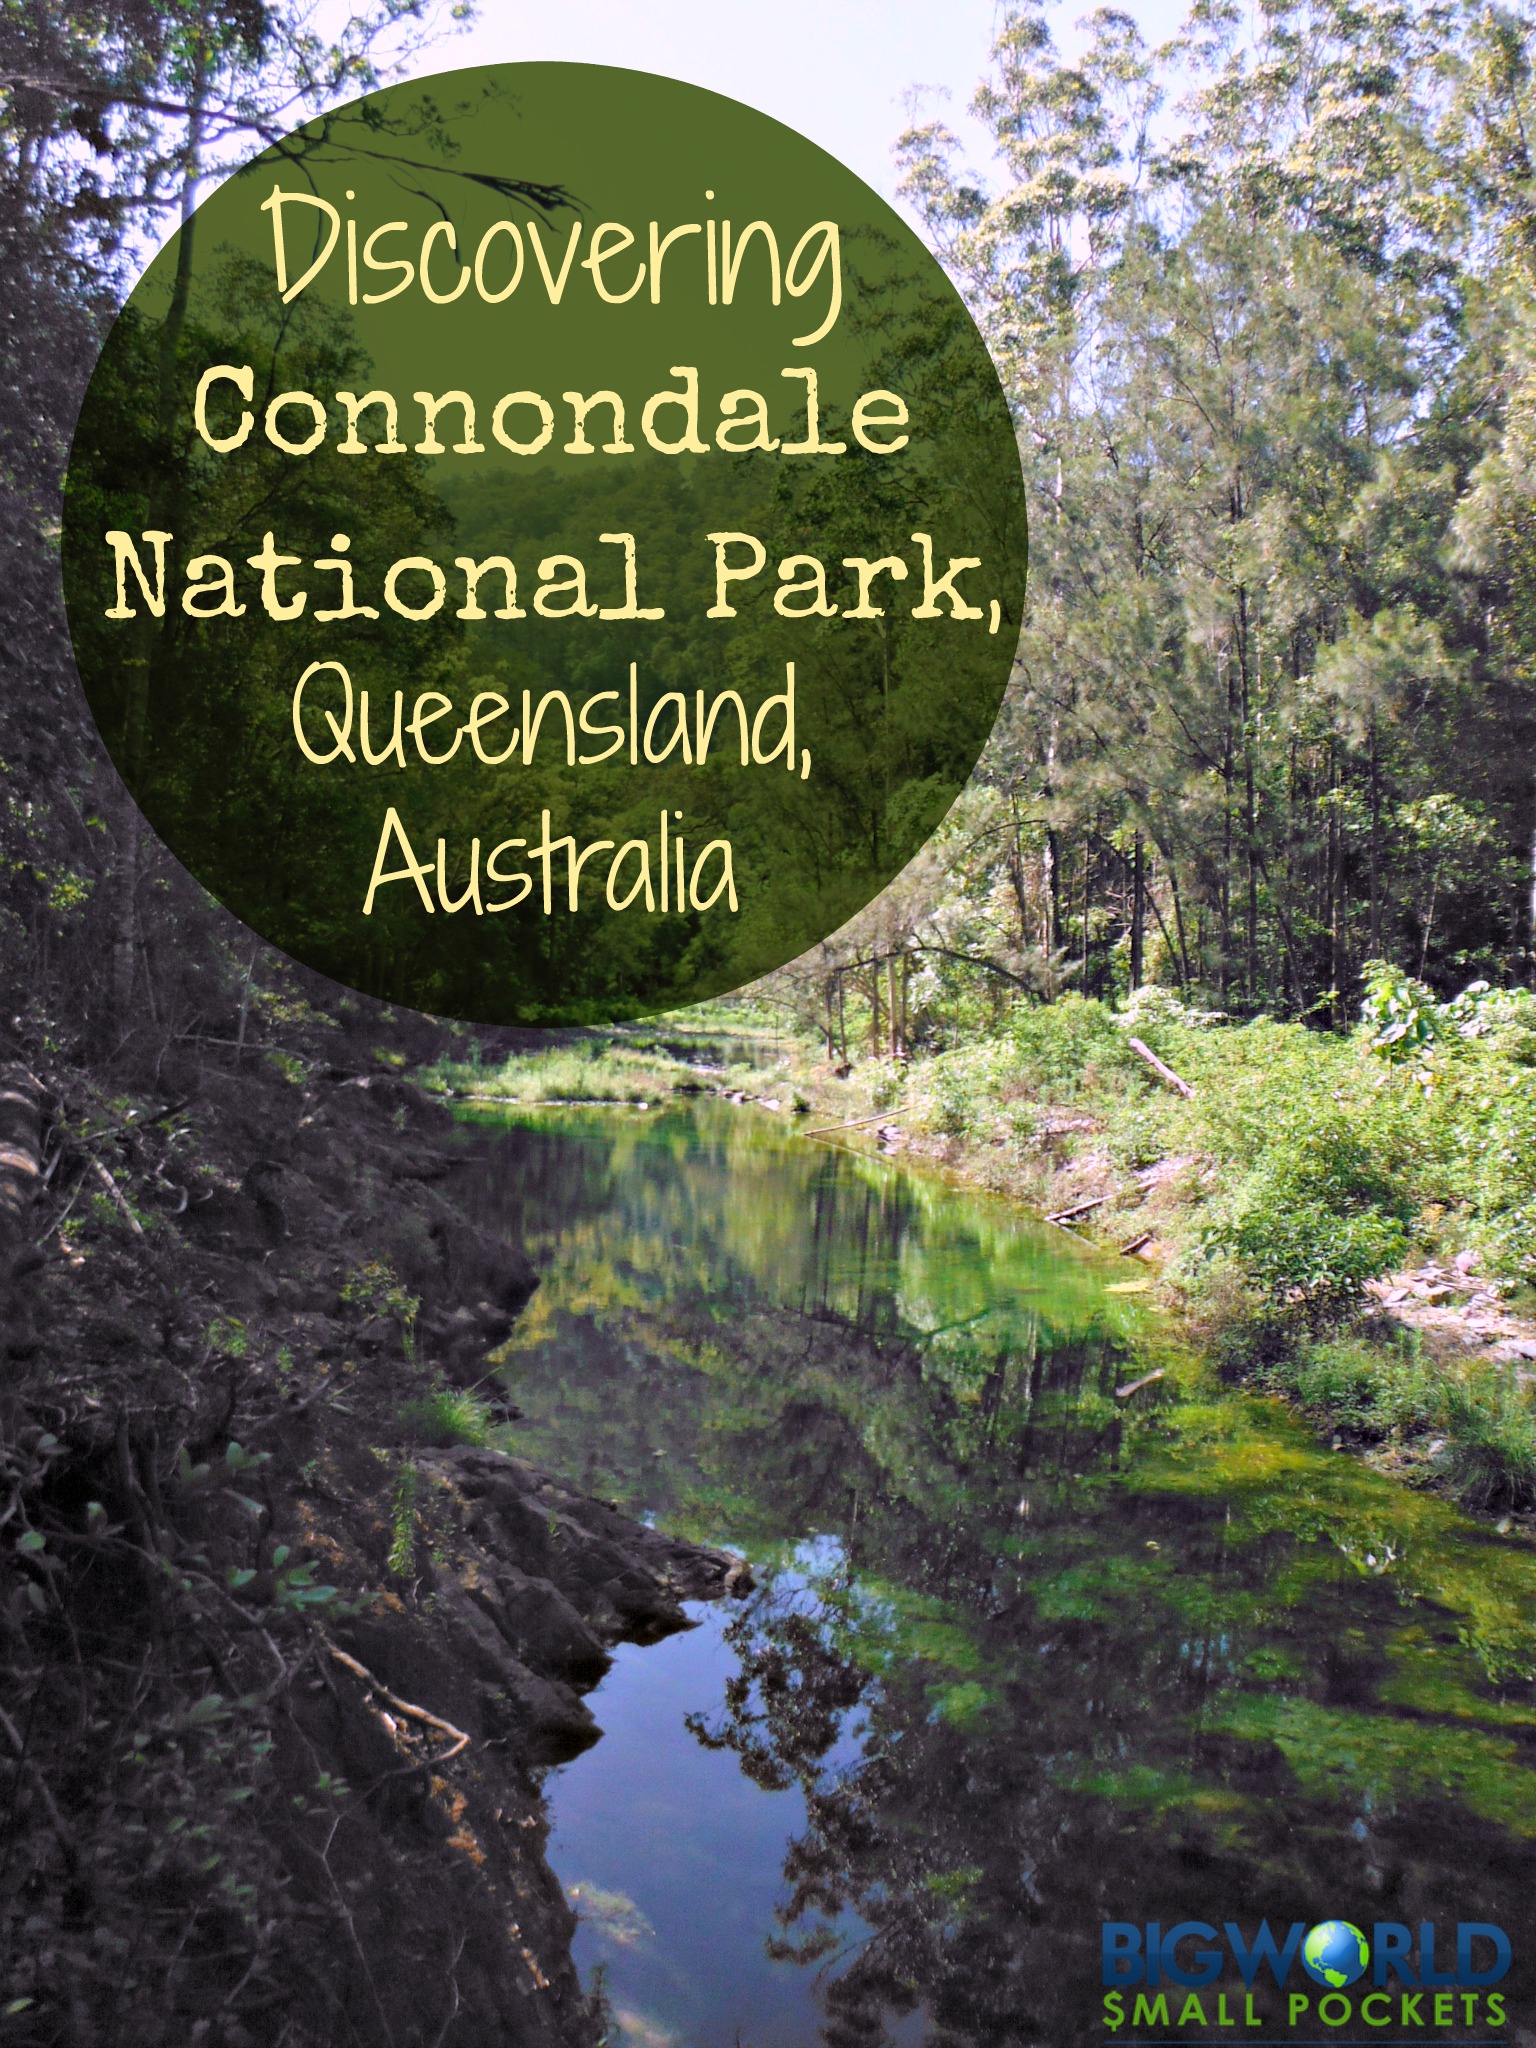 Discovering Conondale National Park, Queensland, Australia {Big World Small Pockets}